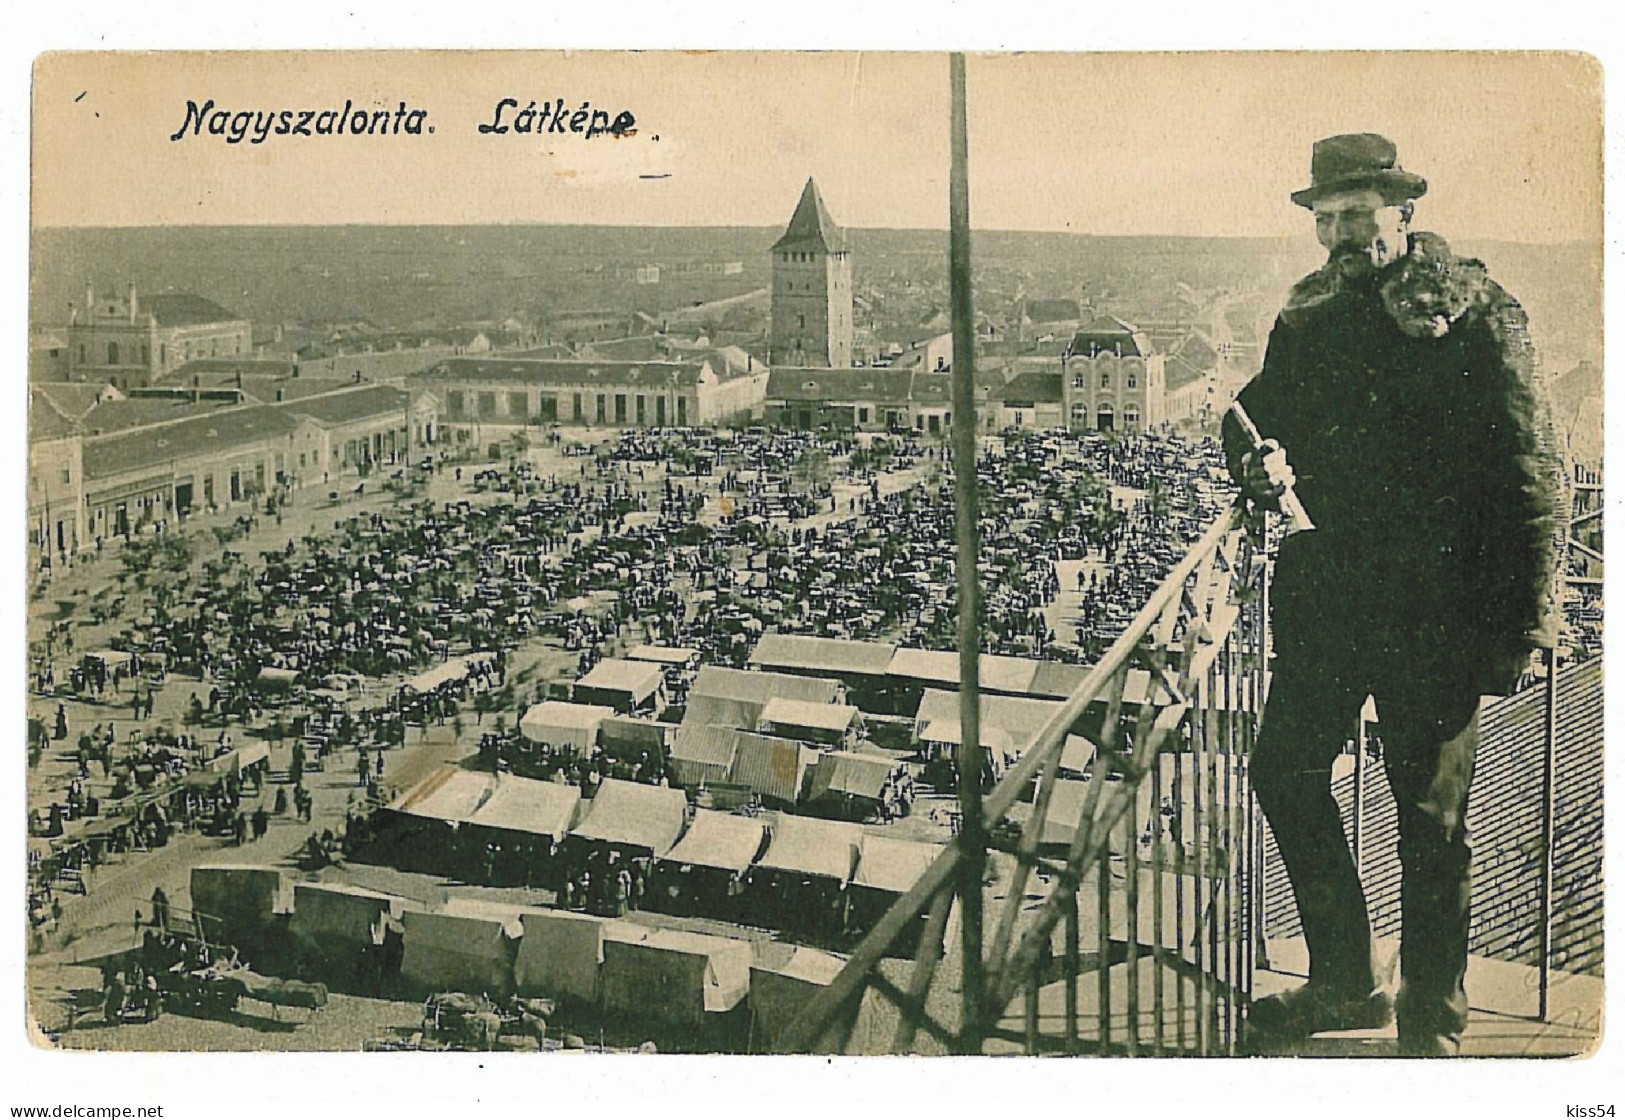 RO 82 - 2003 SALONTA, Synagogue On Left, Market, Romania - Old Postcard - Used - 1914 - Roumanie